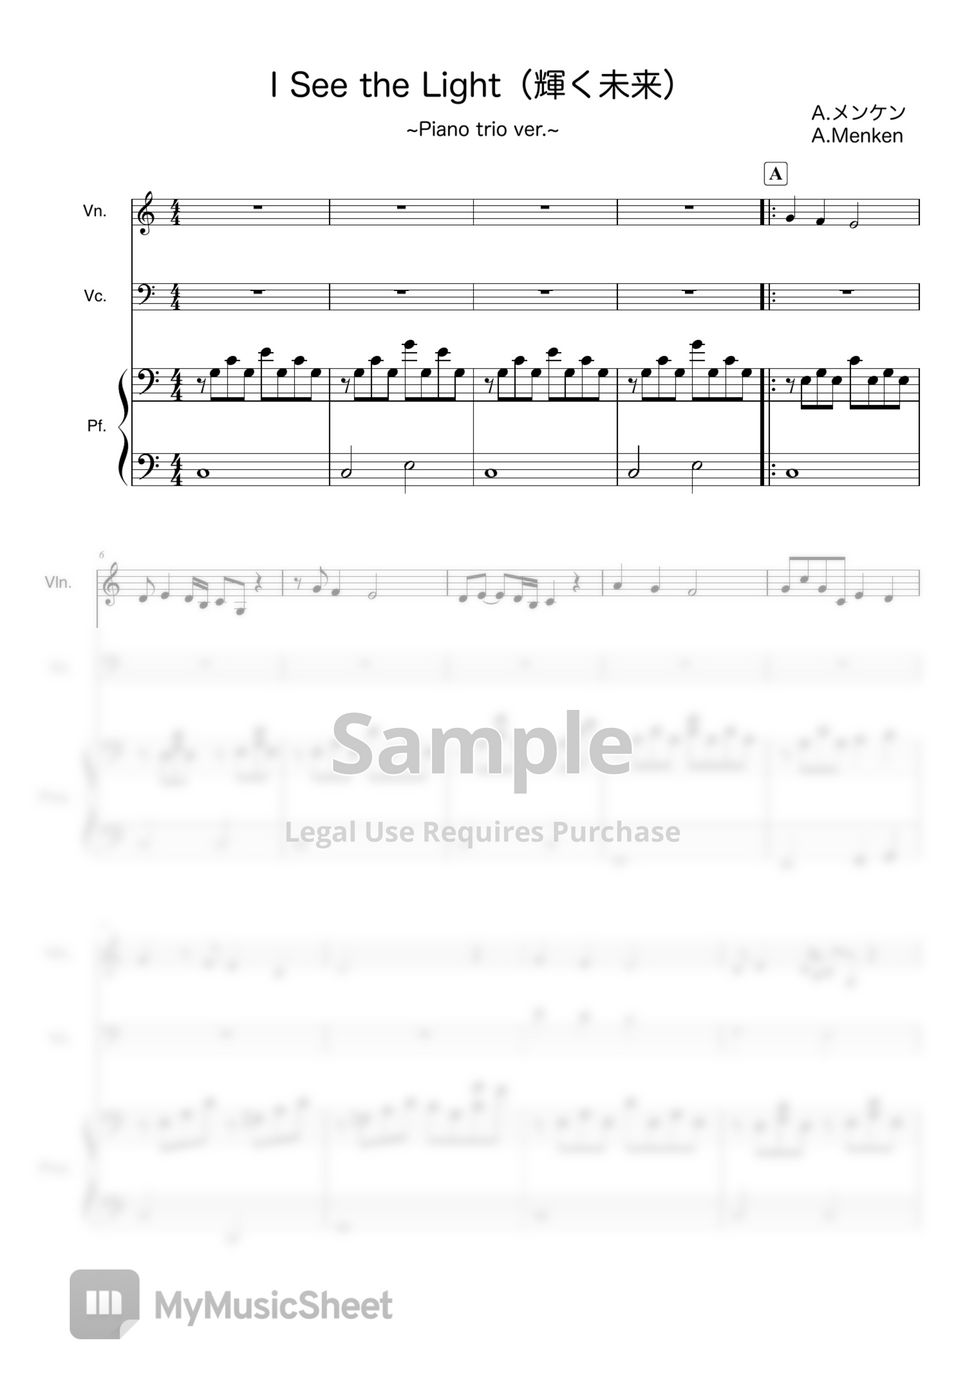 Alan Menken - I see the light（piano trio ver.） (Piano trio ver. （piano,violin,cello）) by yuyu star